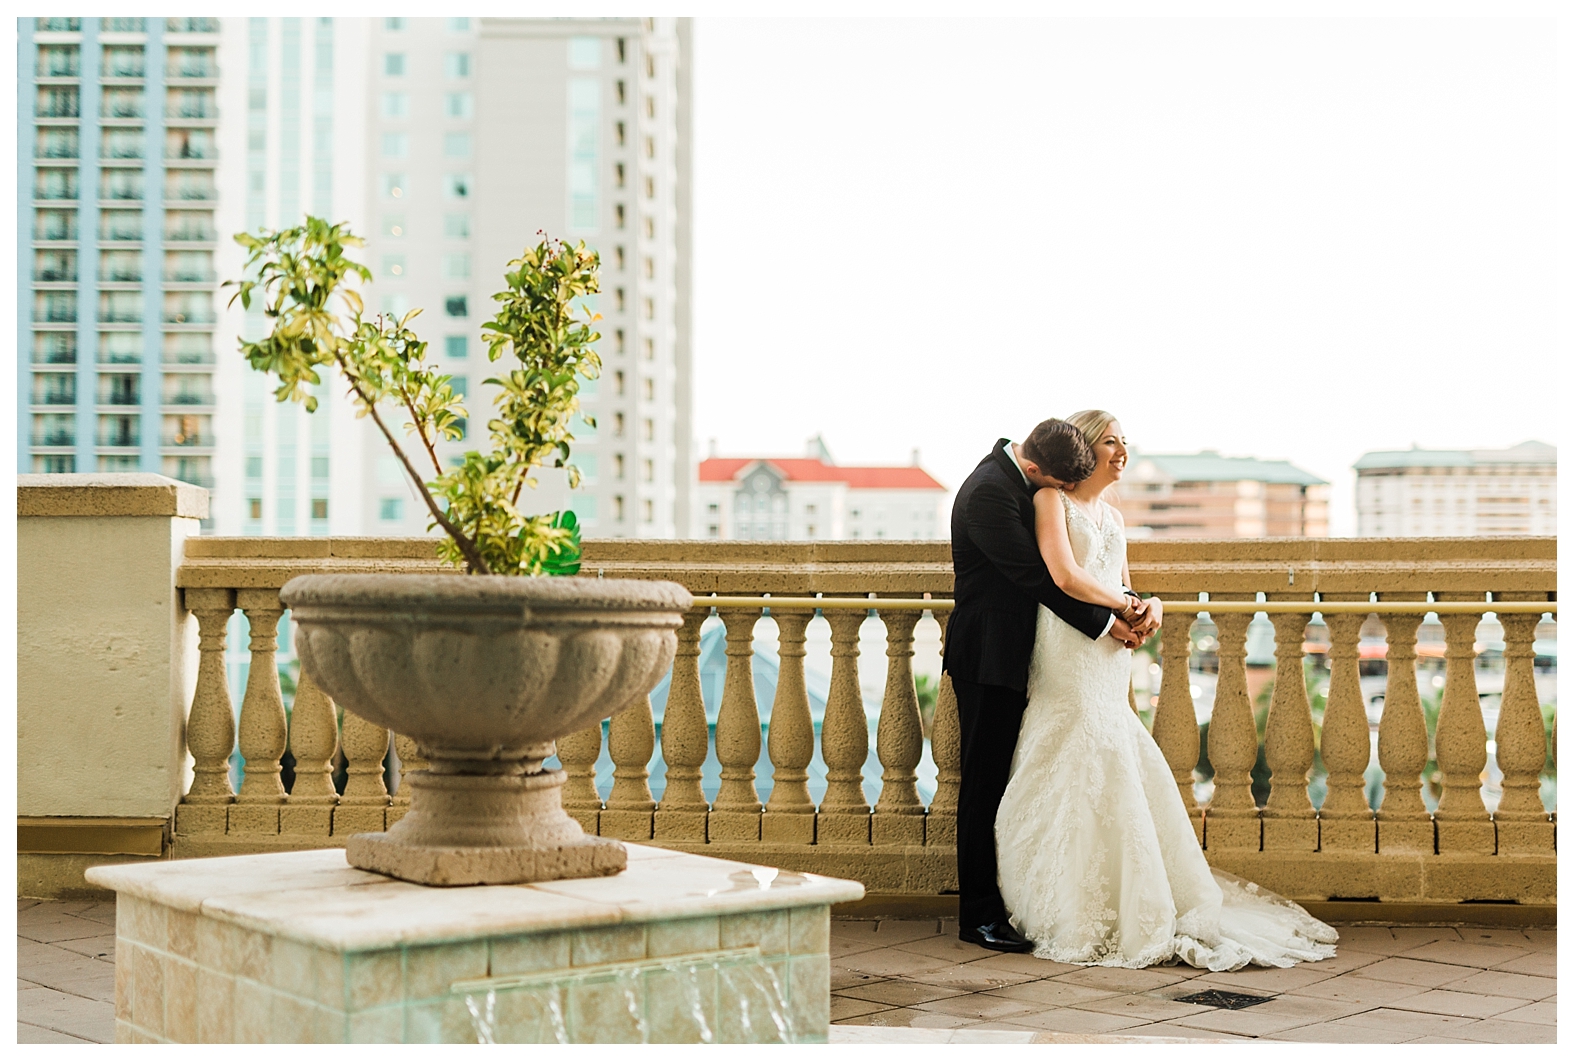 Downtown Tampa Florida Wedding Embassy Suites Hilton - J Canelas Photography